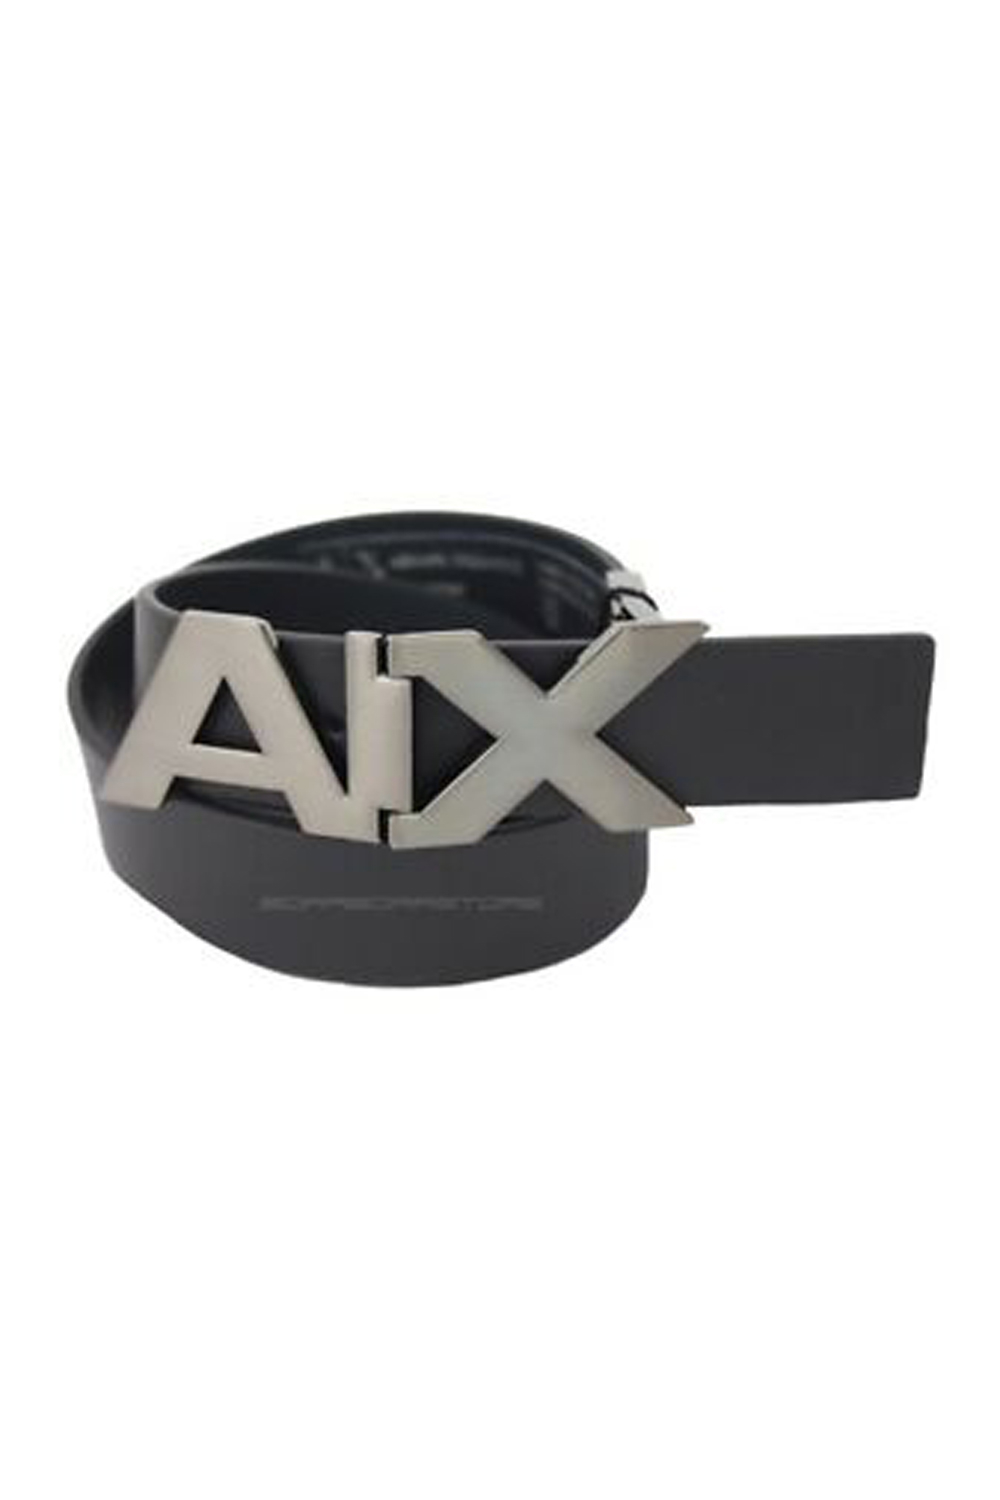 Armani Exchange Black/Phantom Mens Belts 